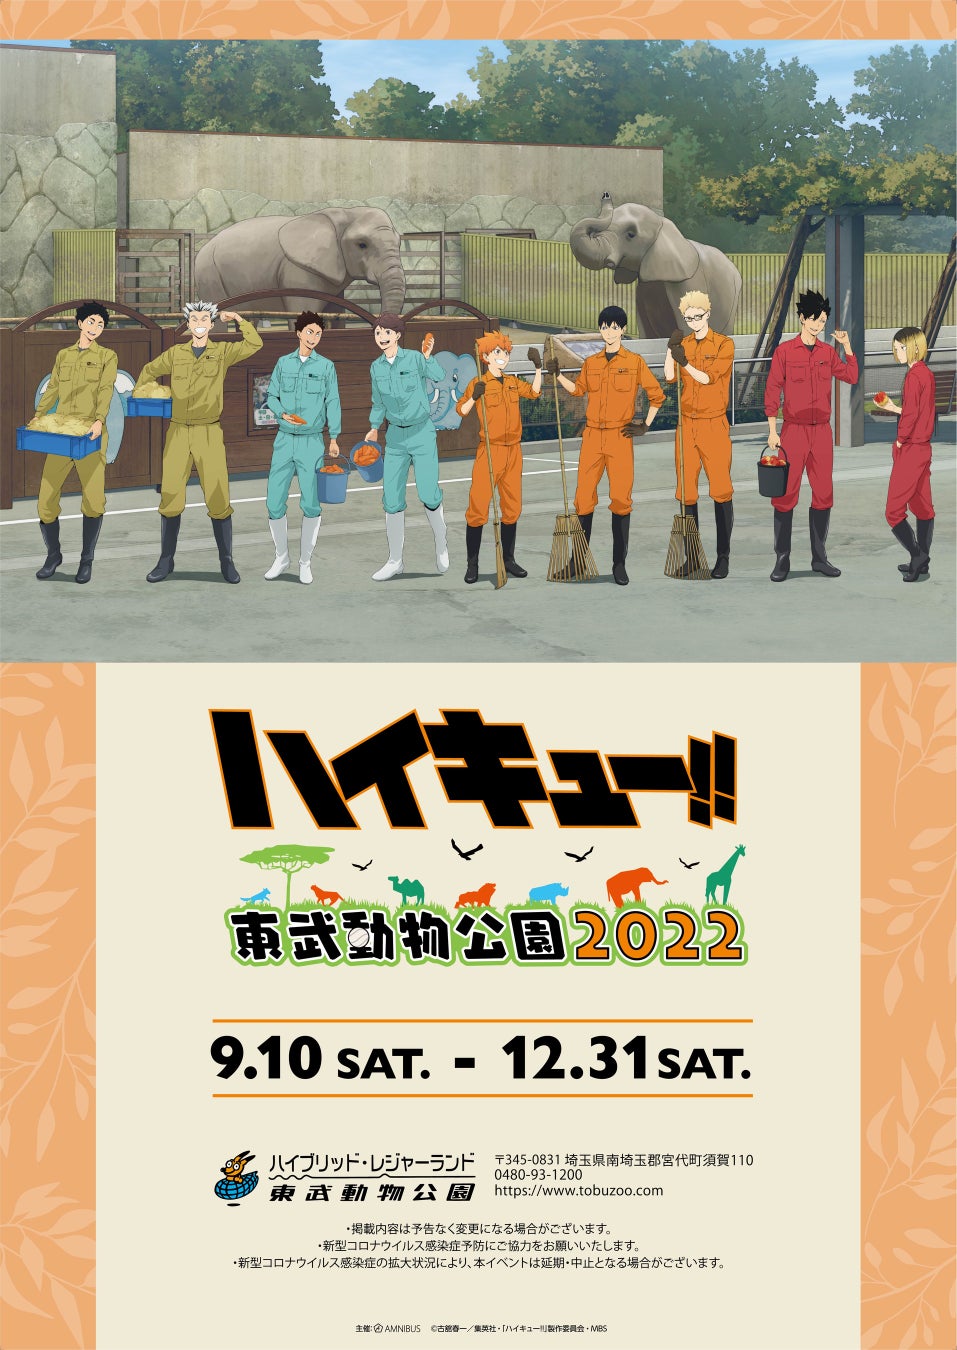 TVアニメ『ハイキュー!!』と「東武動物公園」のコラボイベント「ハイキュー!! × 東武動物公園 2022」の詳細公開！